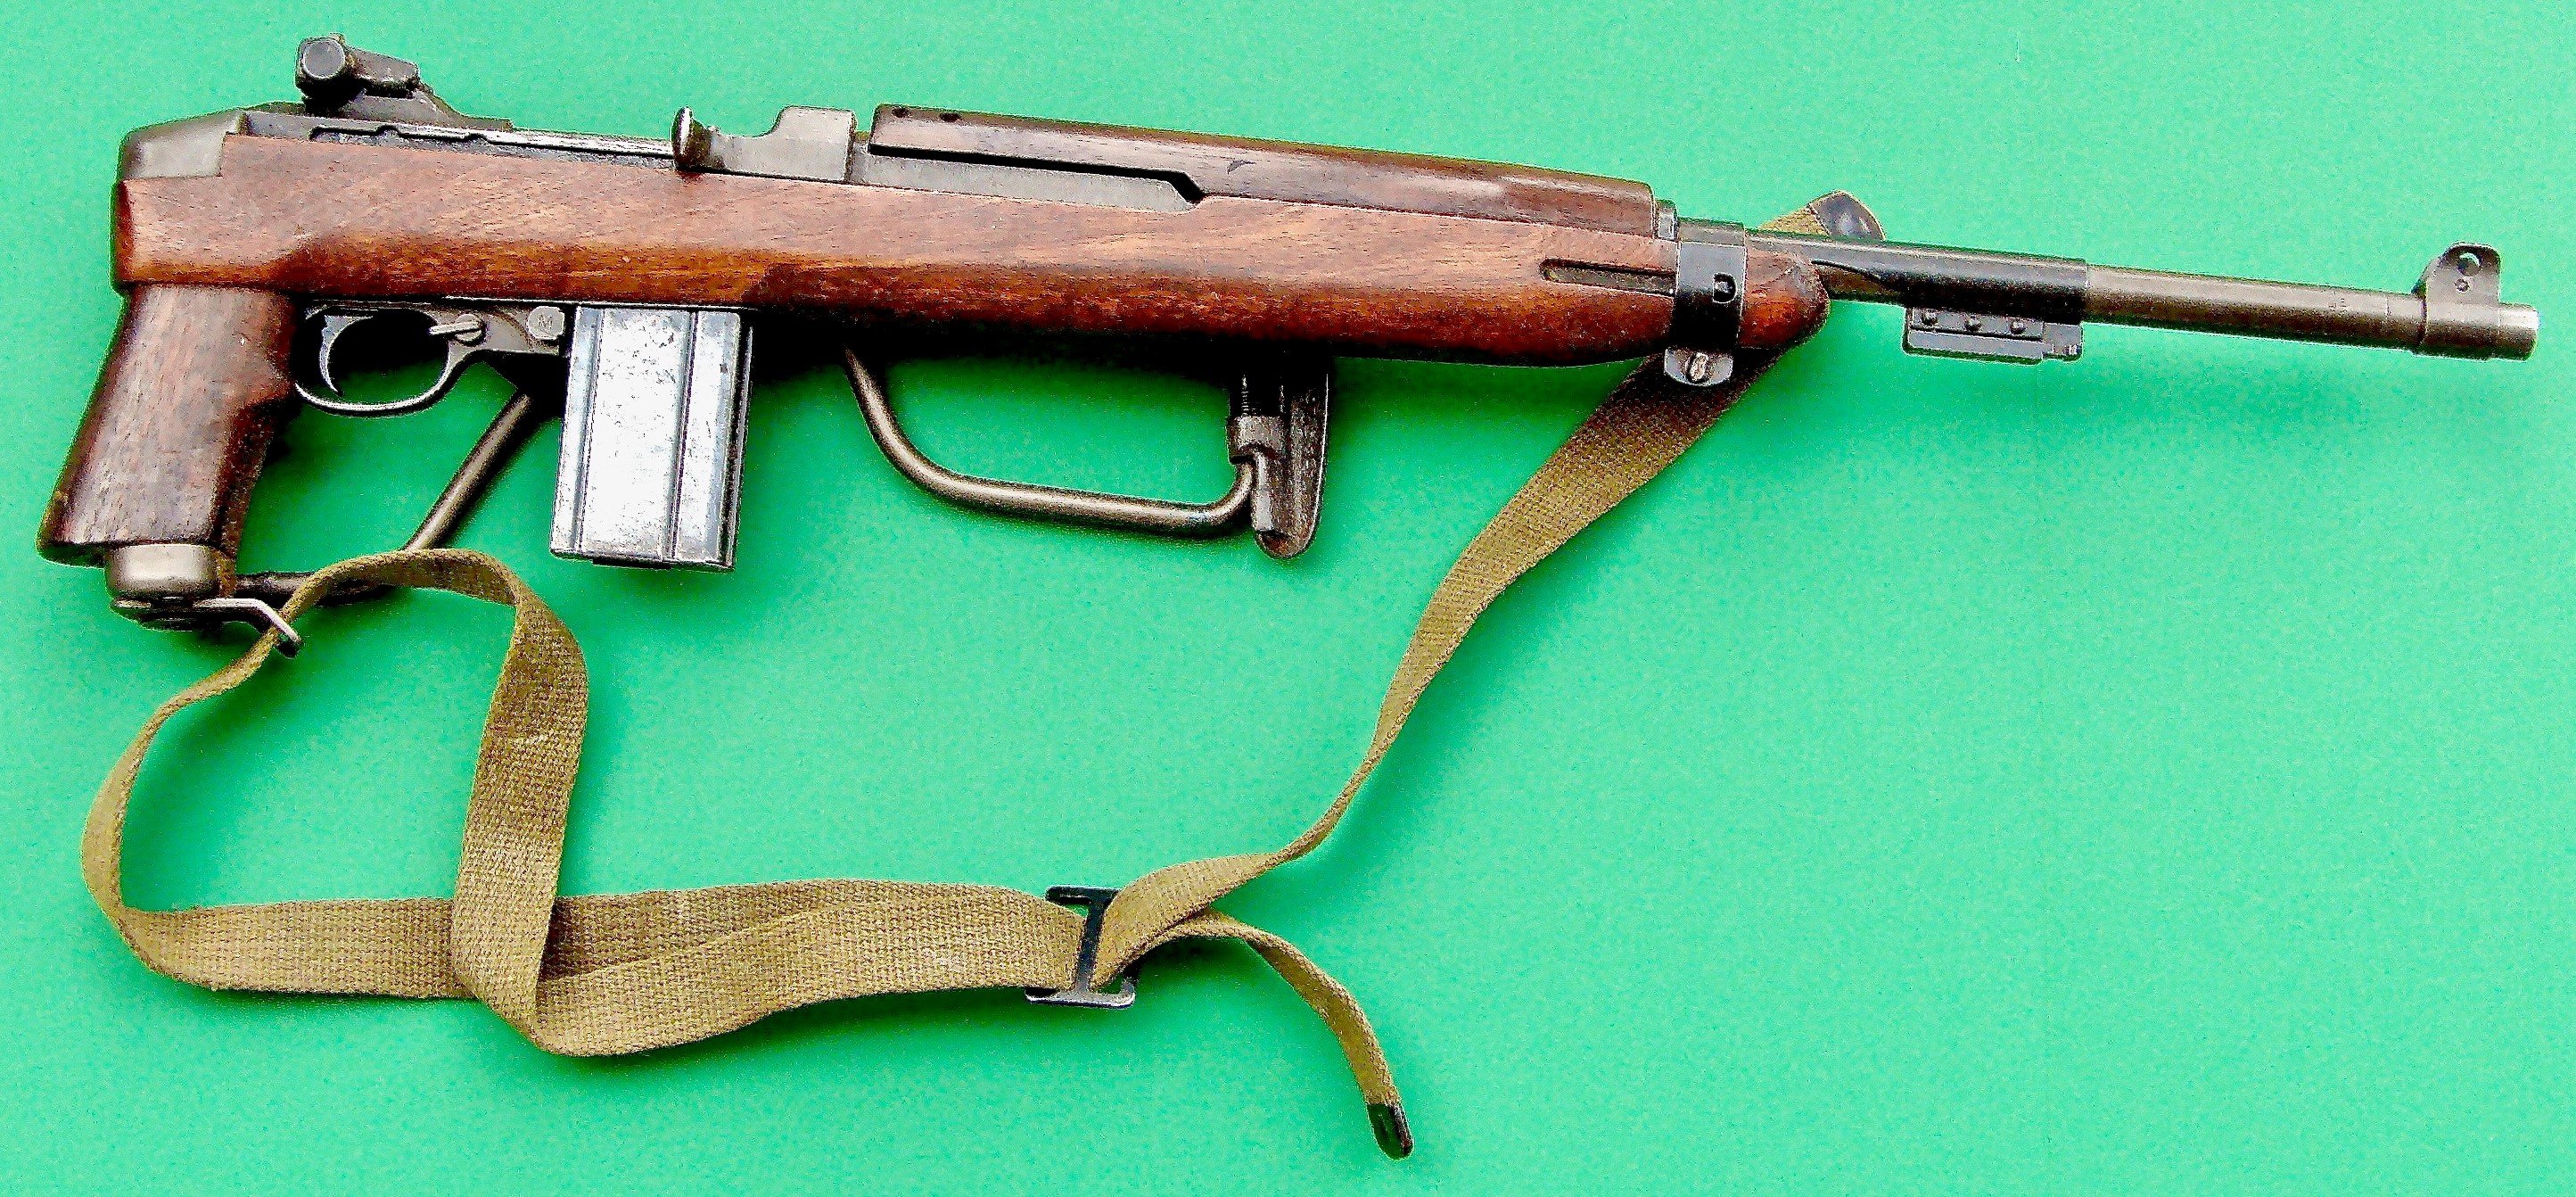 M1a1 Carbine